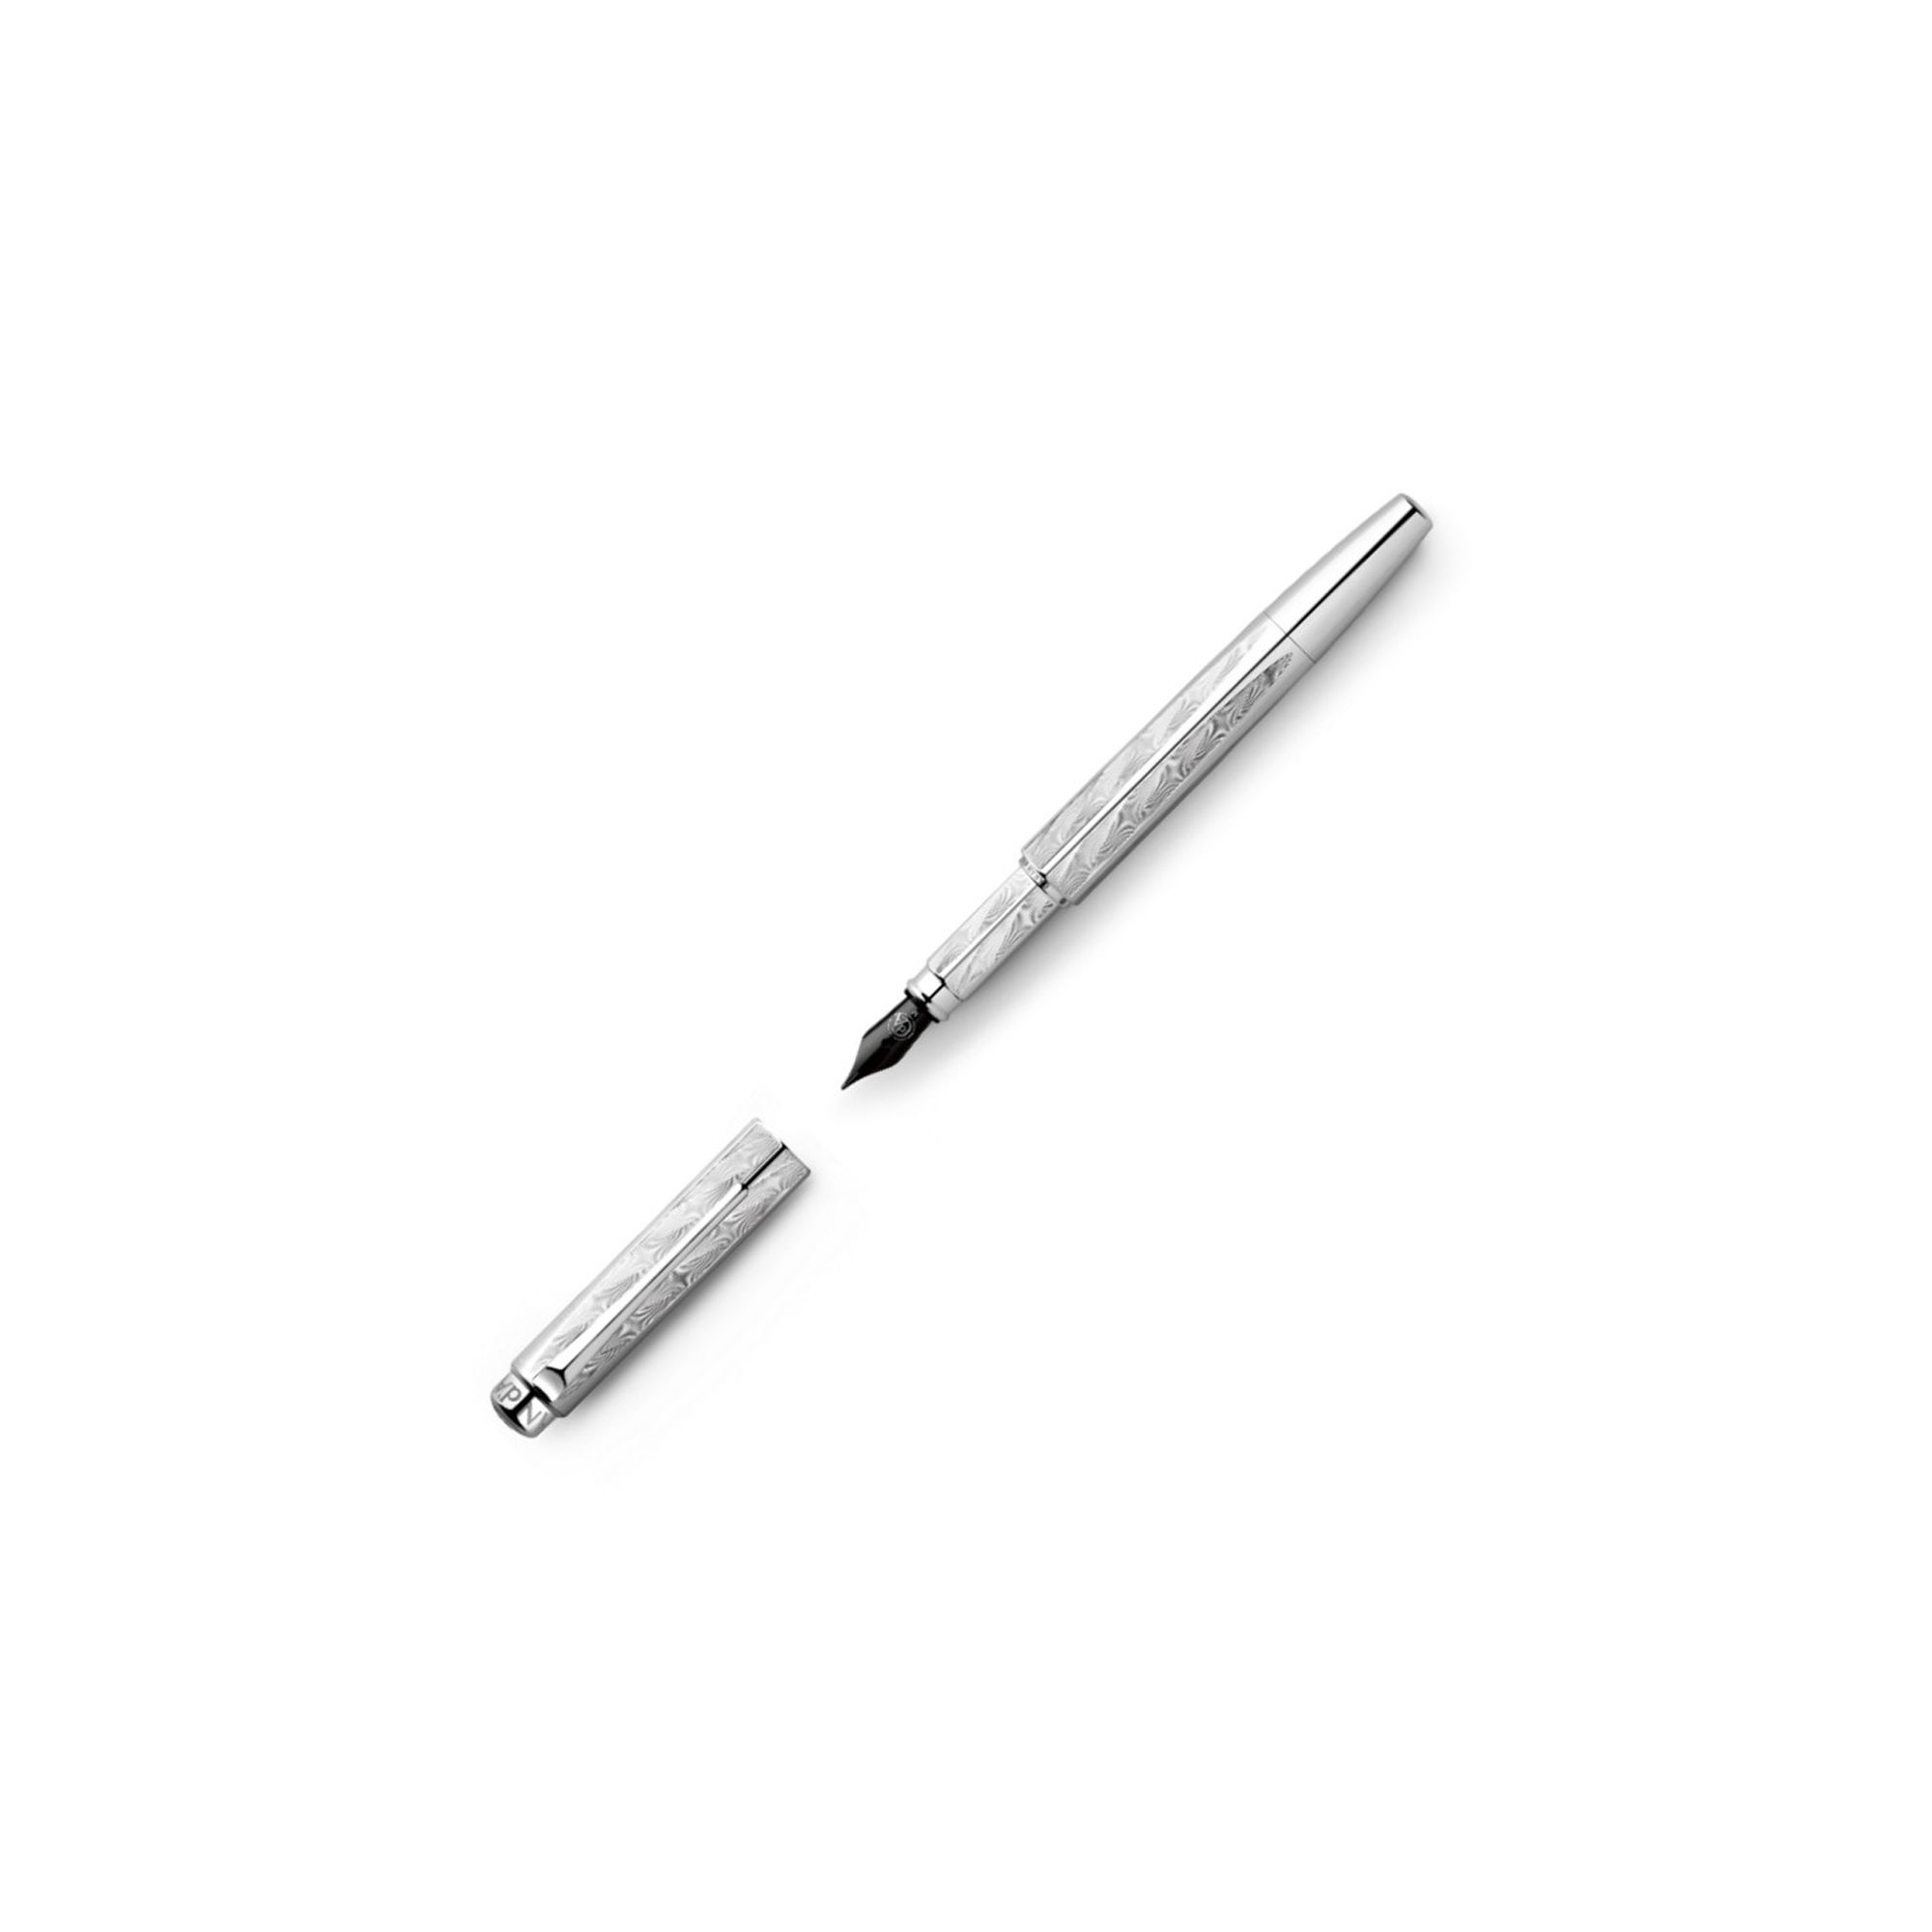 Caran D'ache RNX316 Stainless Steel Fountain Pen at Tesco Direct